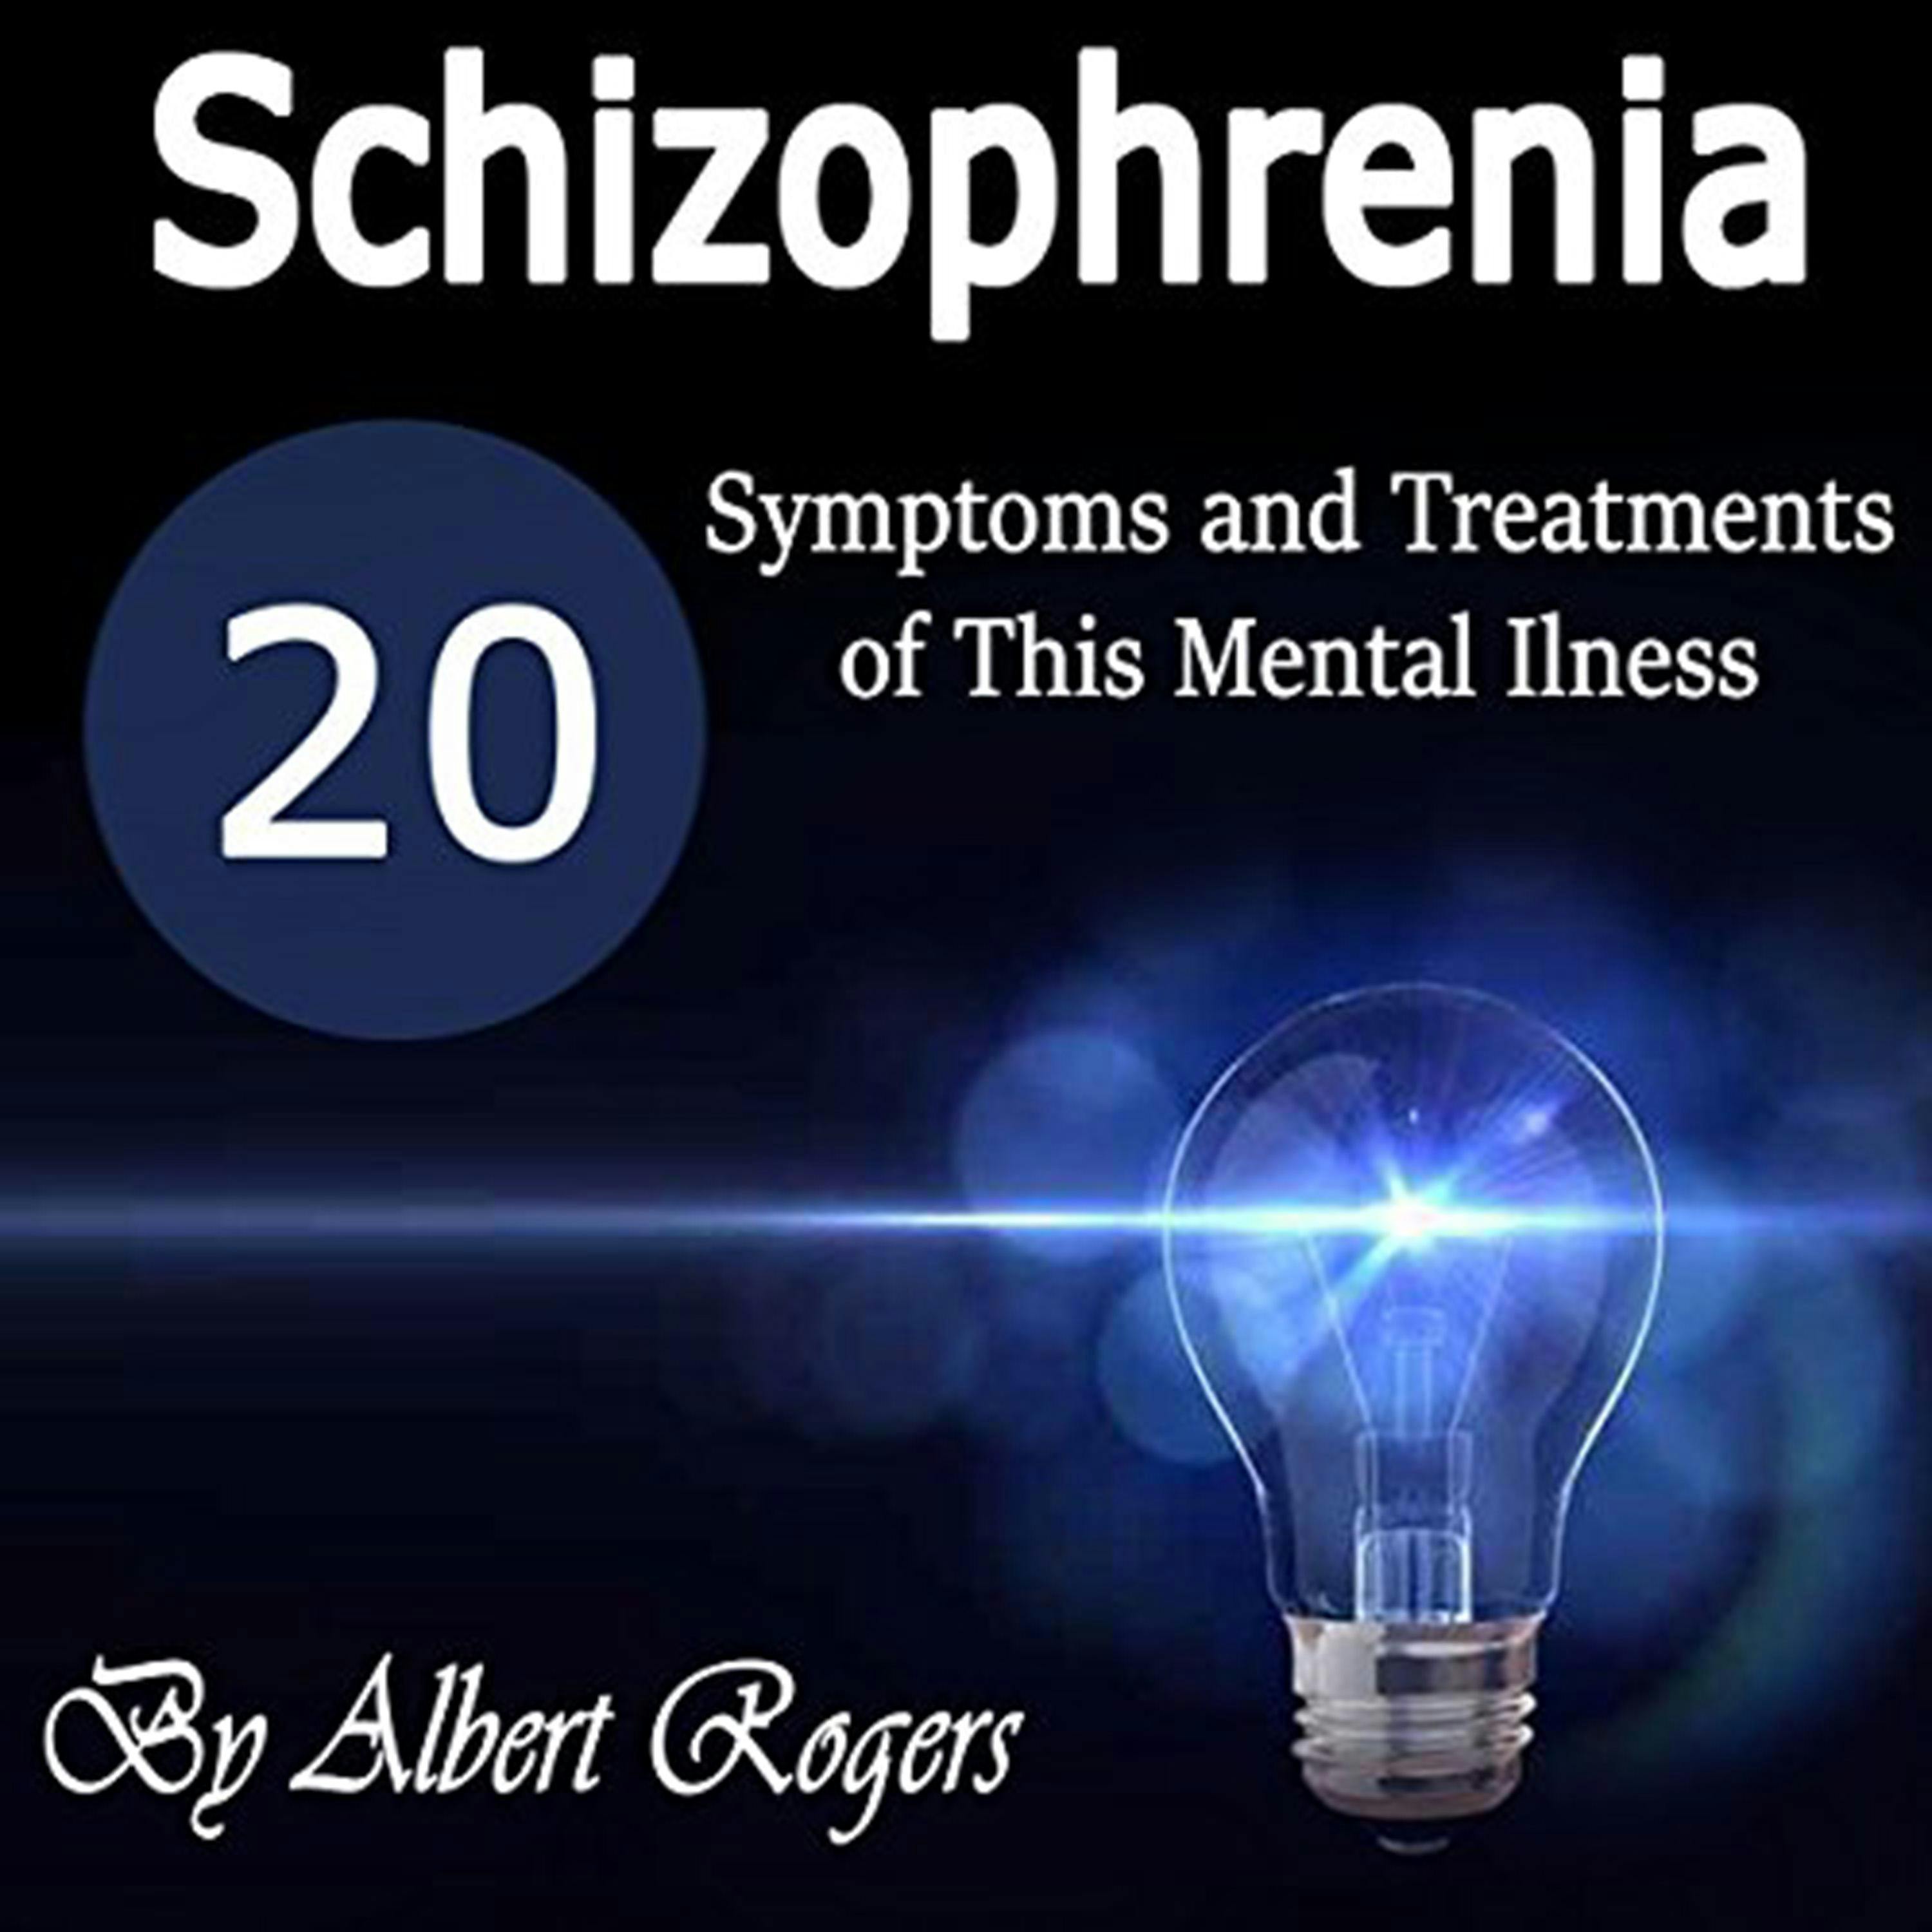 Schizophrenia: 20 Symptoms and Treatments of This Mental Illness - Albert Rogers